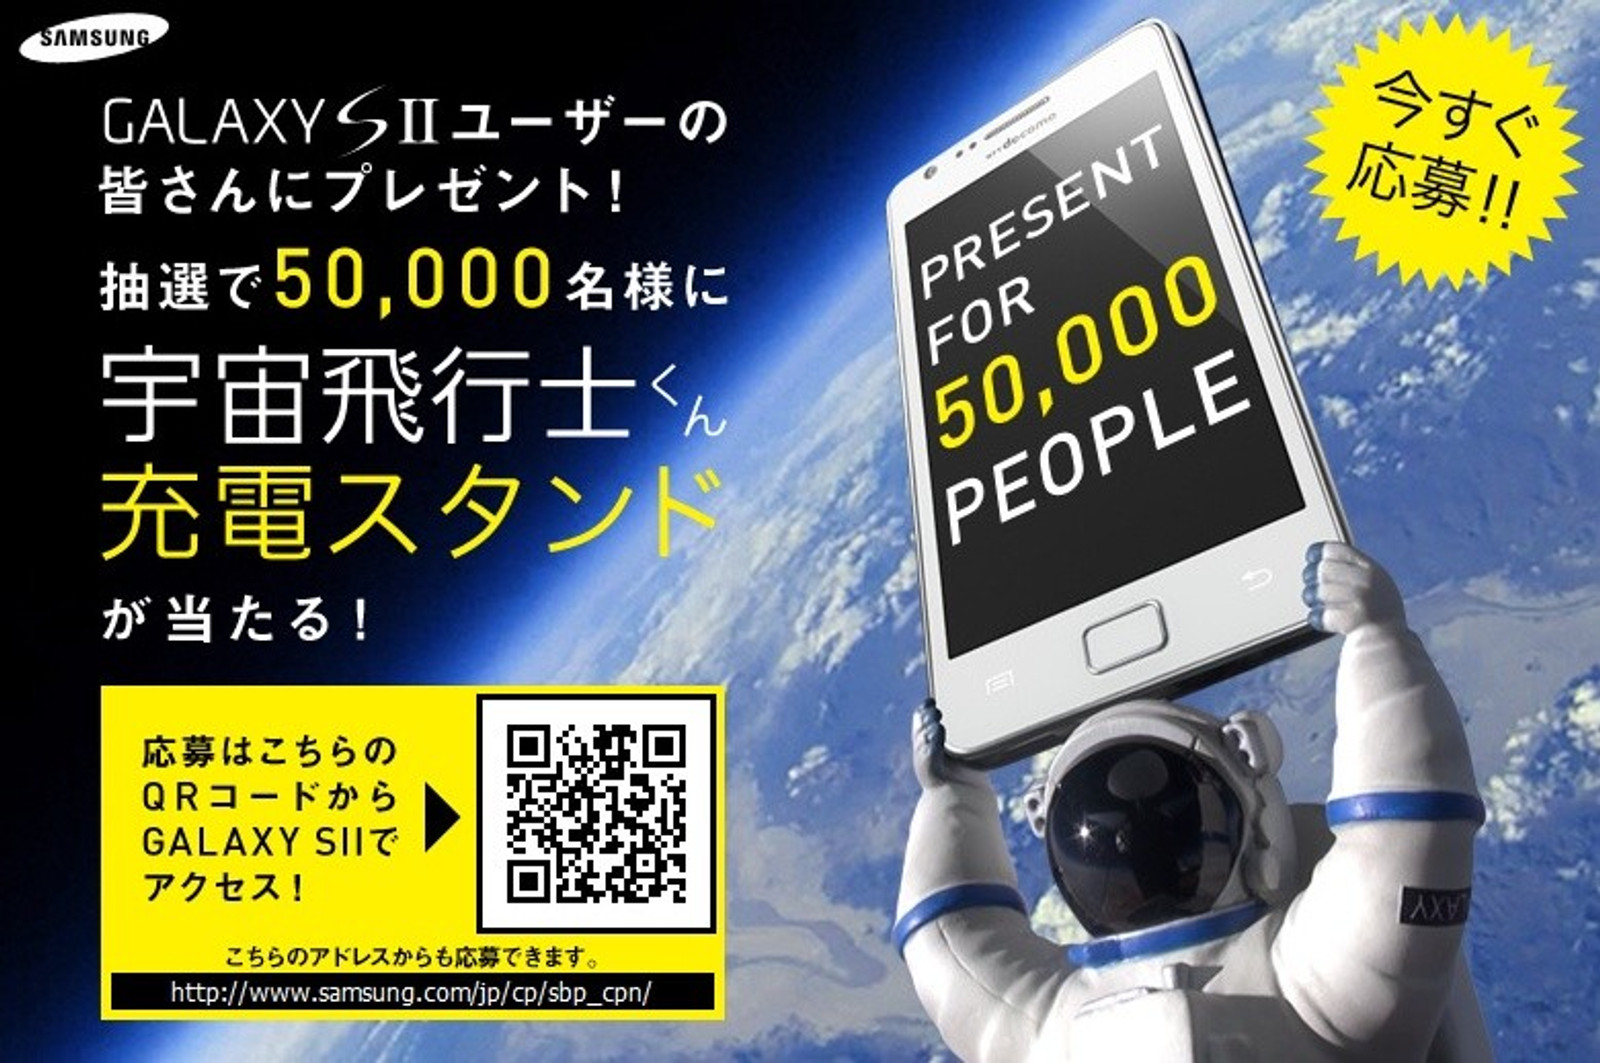 Astronaut Figure type Smart Phone Stand for GALAXY S2 II SAMSUNG JAPAN